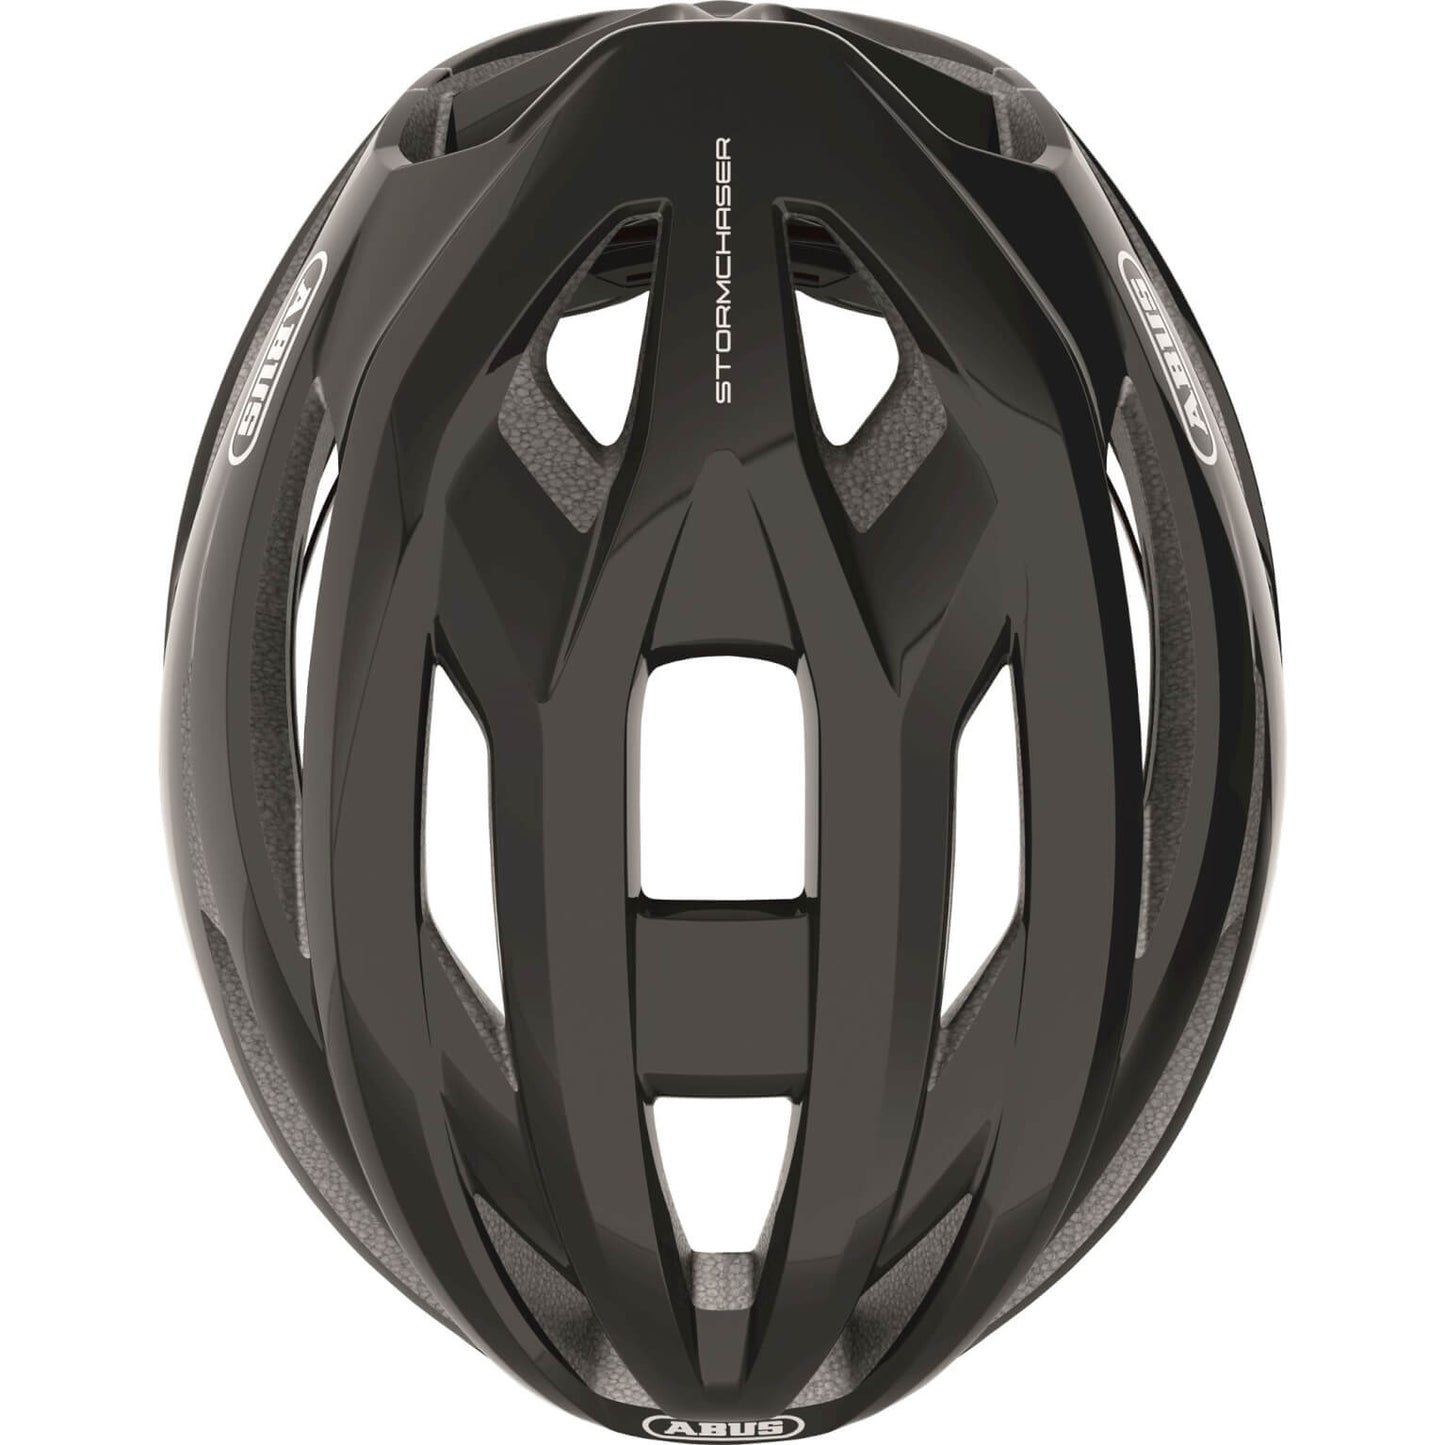 ABUS Helmet StGoudmchaser Luccoso nero L 59-61 cm